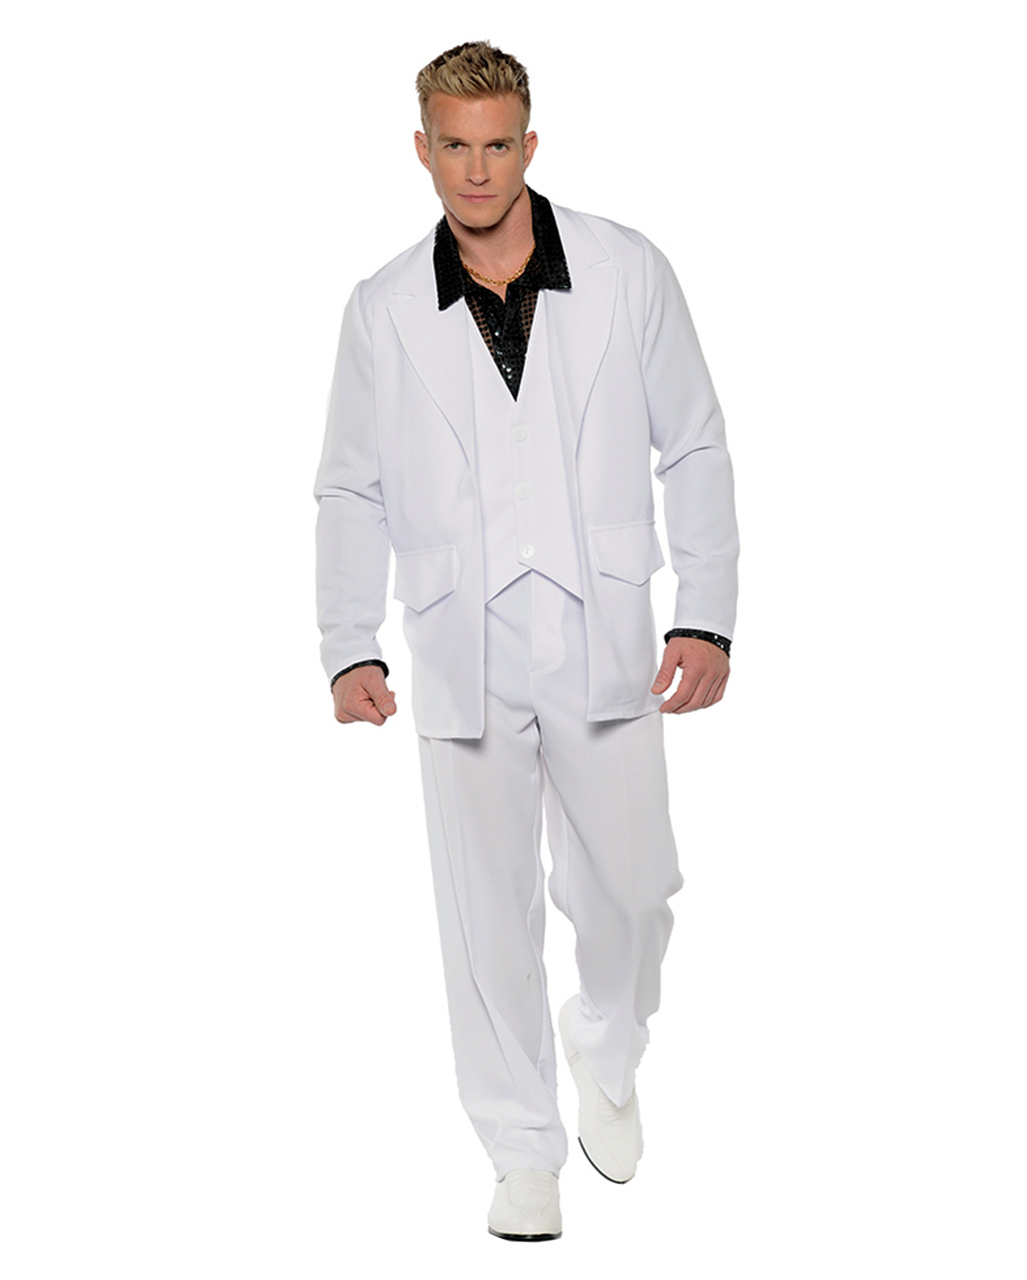 I wear clothes combination embroidery White 70s Men Costume Suit for theme parties | Horror-Shop.com